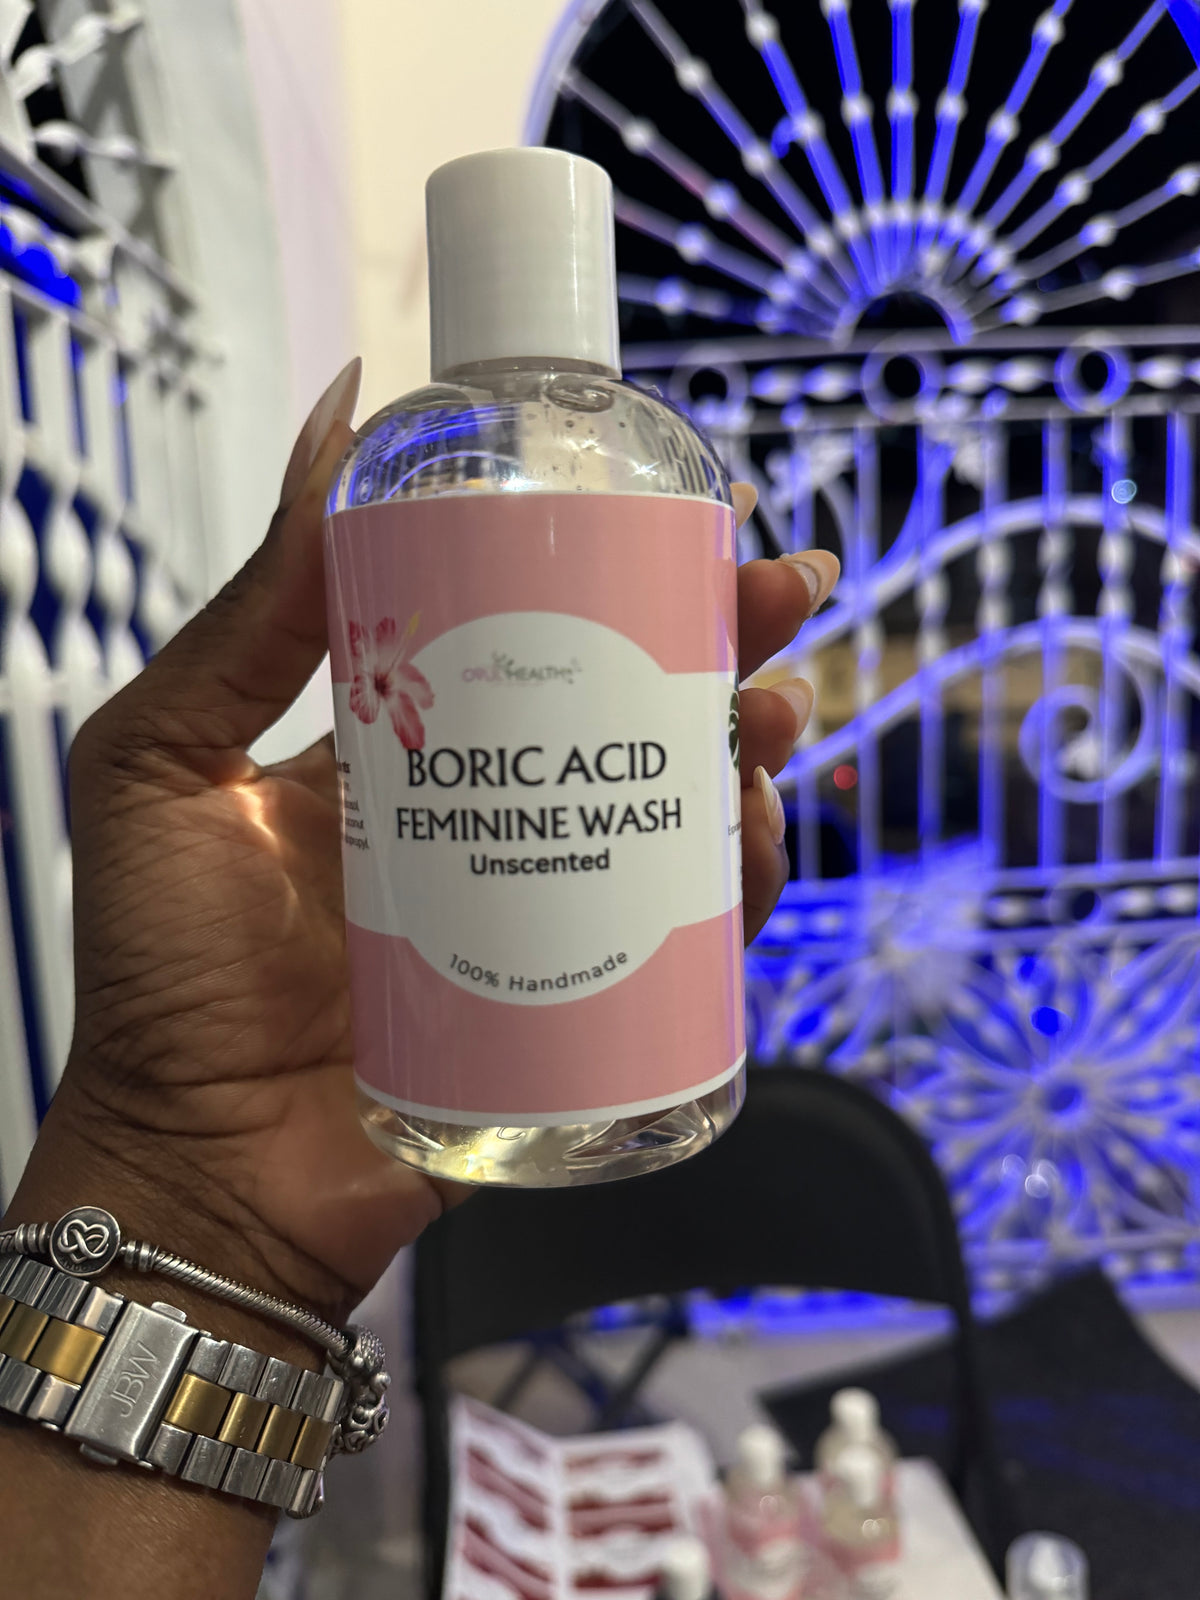 Boric acid feminine gel wash